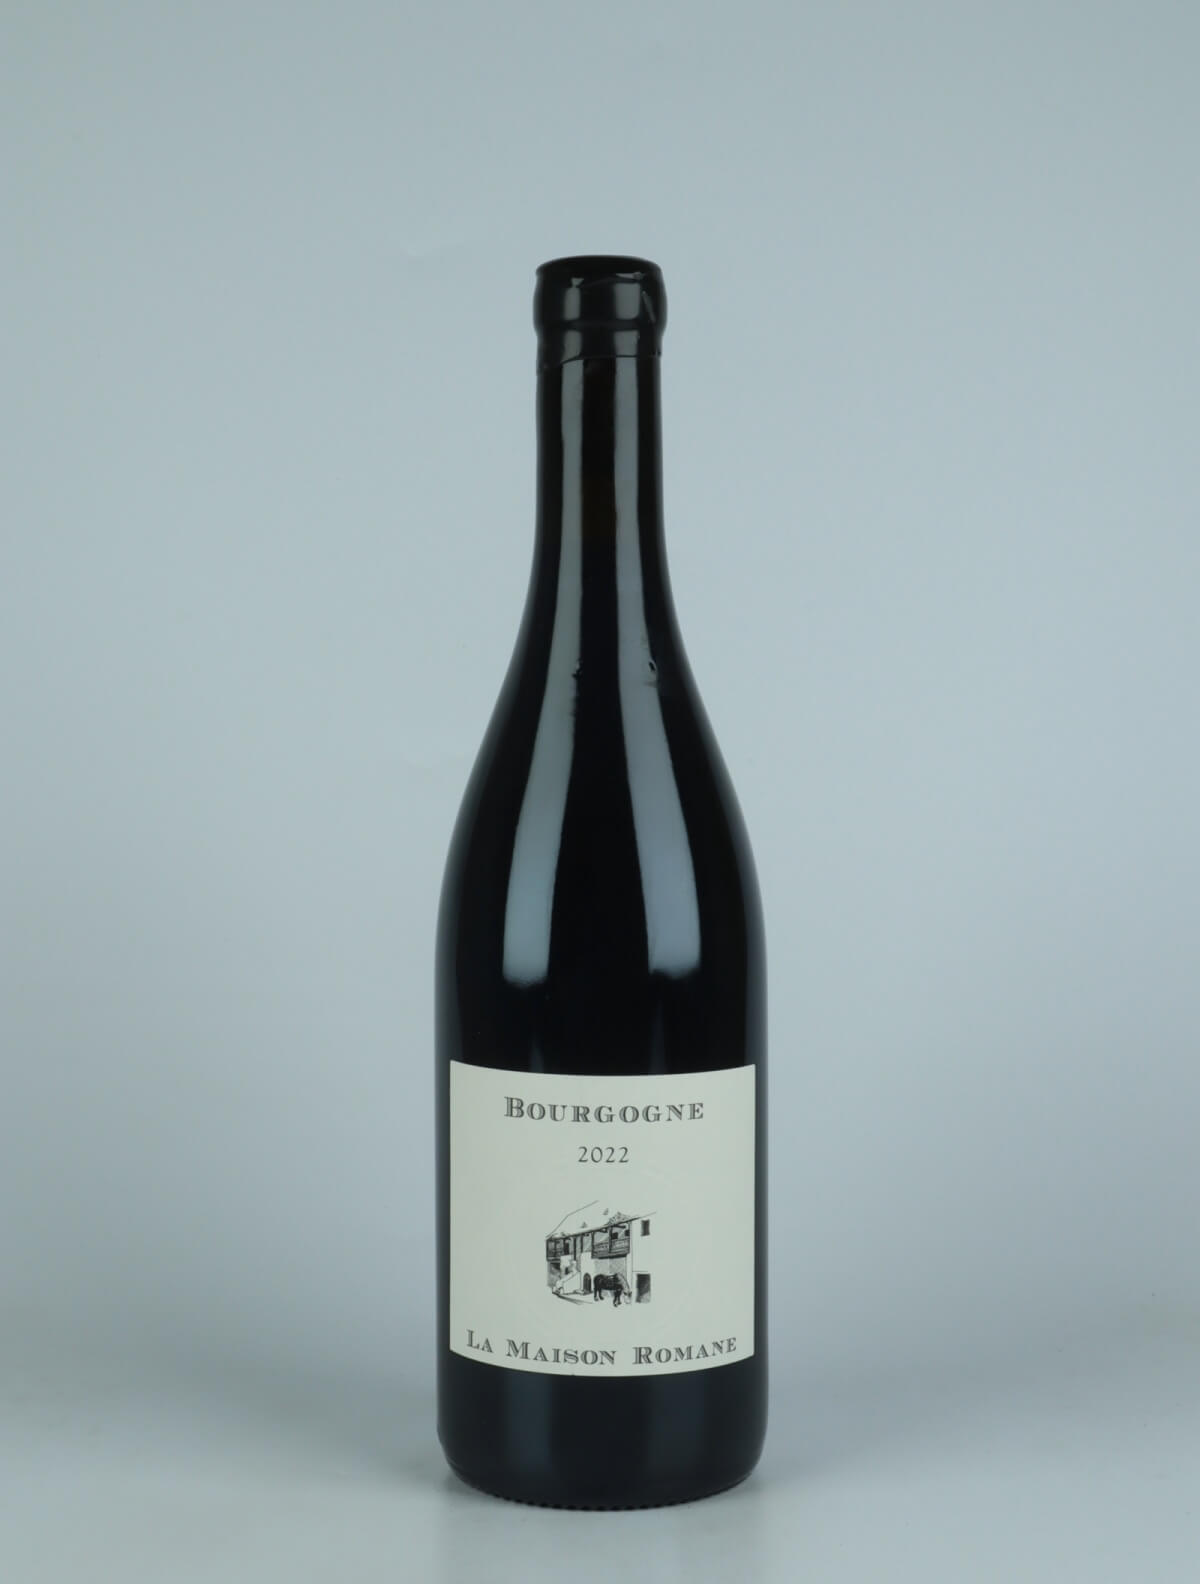 A bottle 2022 Bourgogne Rouge Red wine from La Maison Romane, Burgundy in France